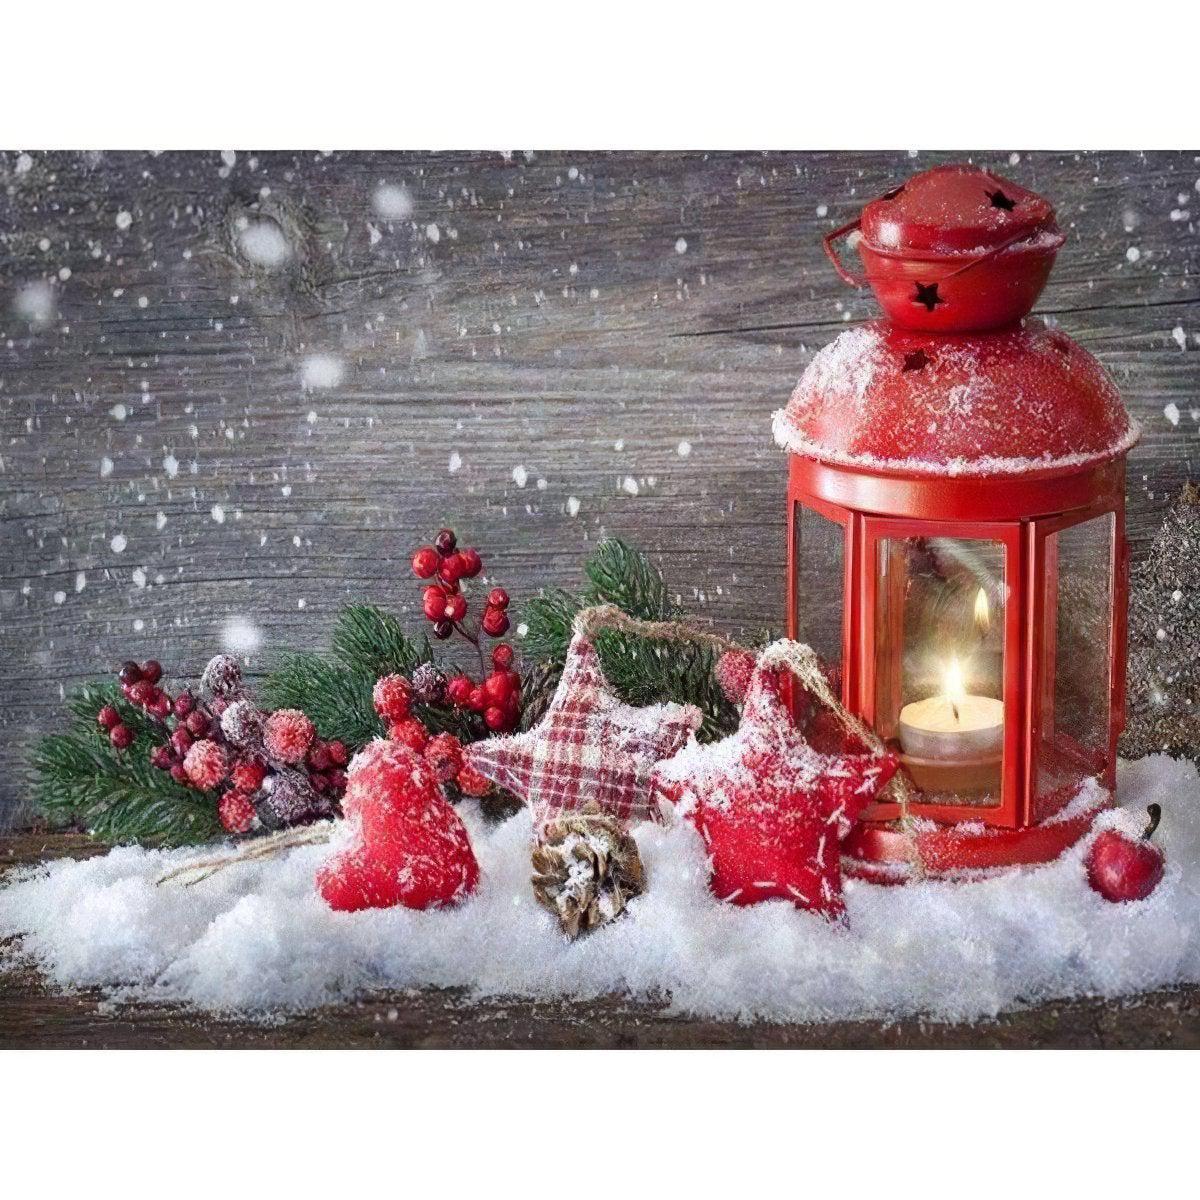 A single Christmas candle glowing warmly, symbolizing hope, warmth, spirit of the holiday.Christmas Candle - Diamondartlove